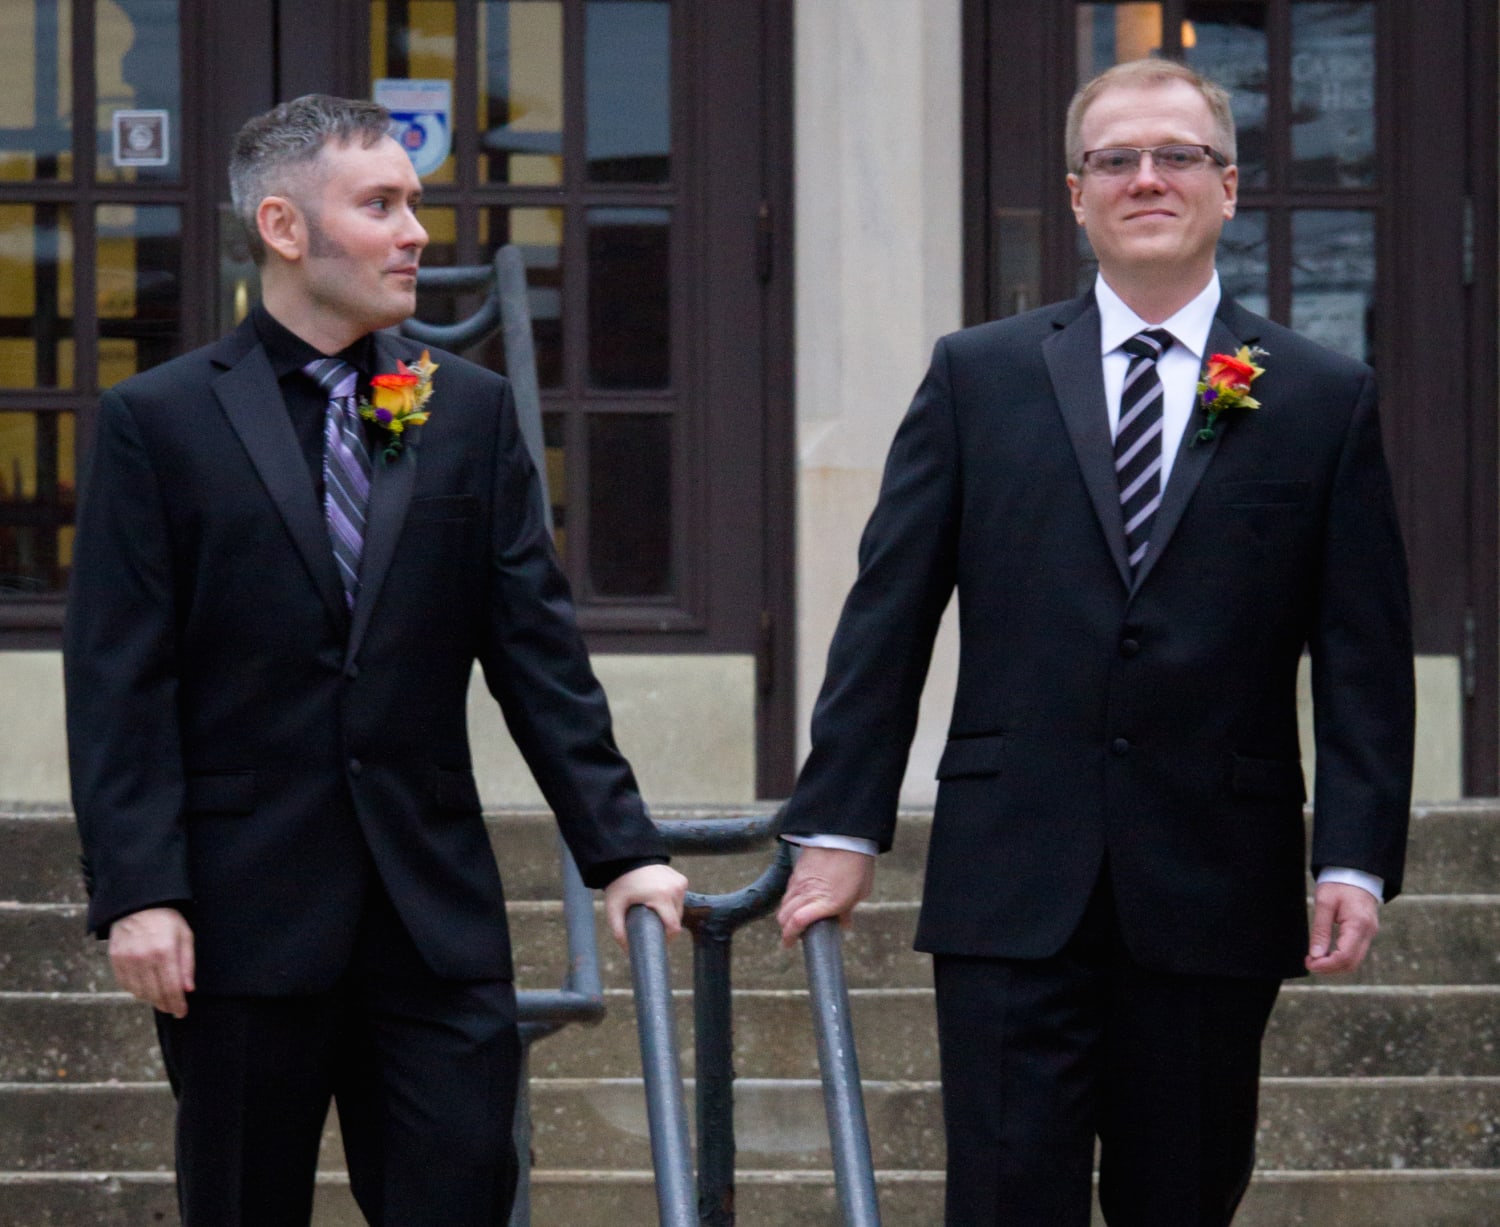 Jury awards $100,000 to Kentucky gay couple denied marriage license